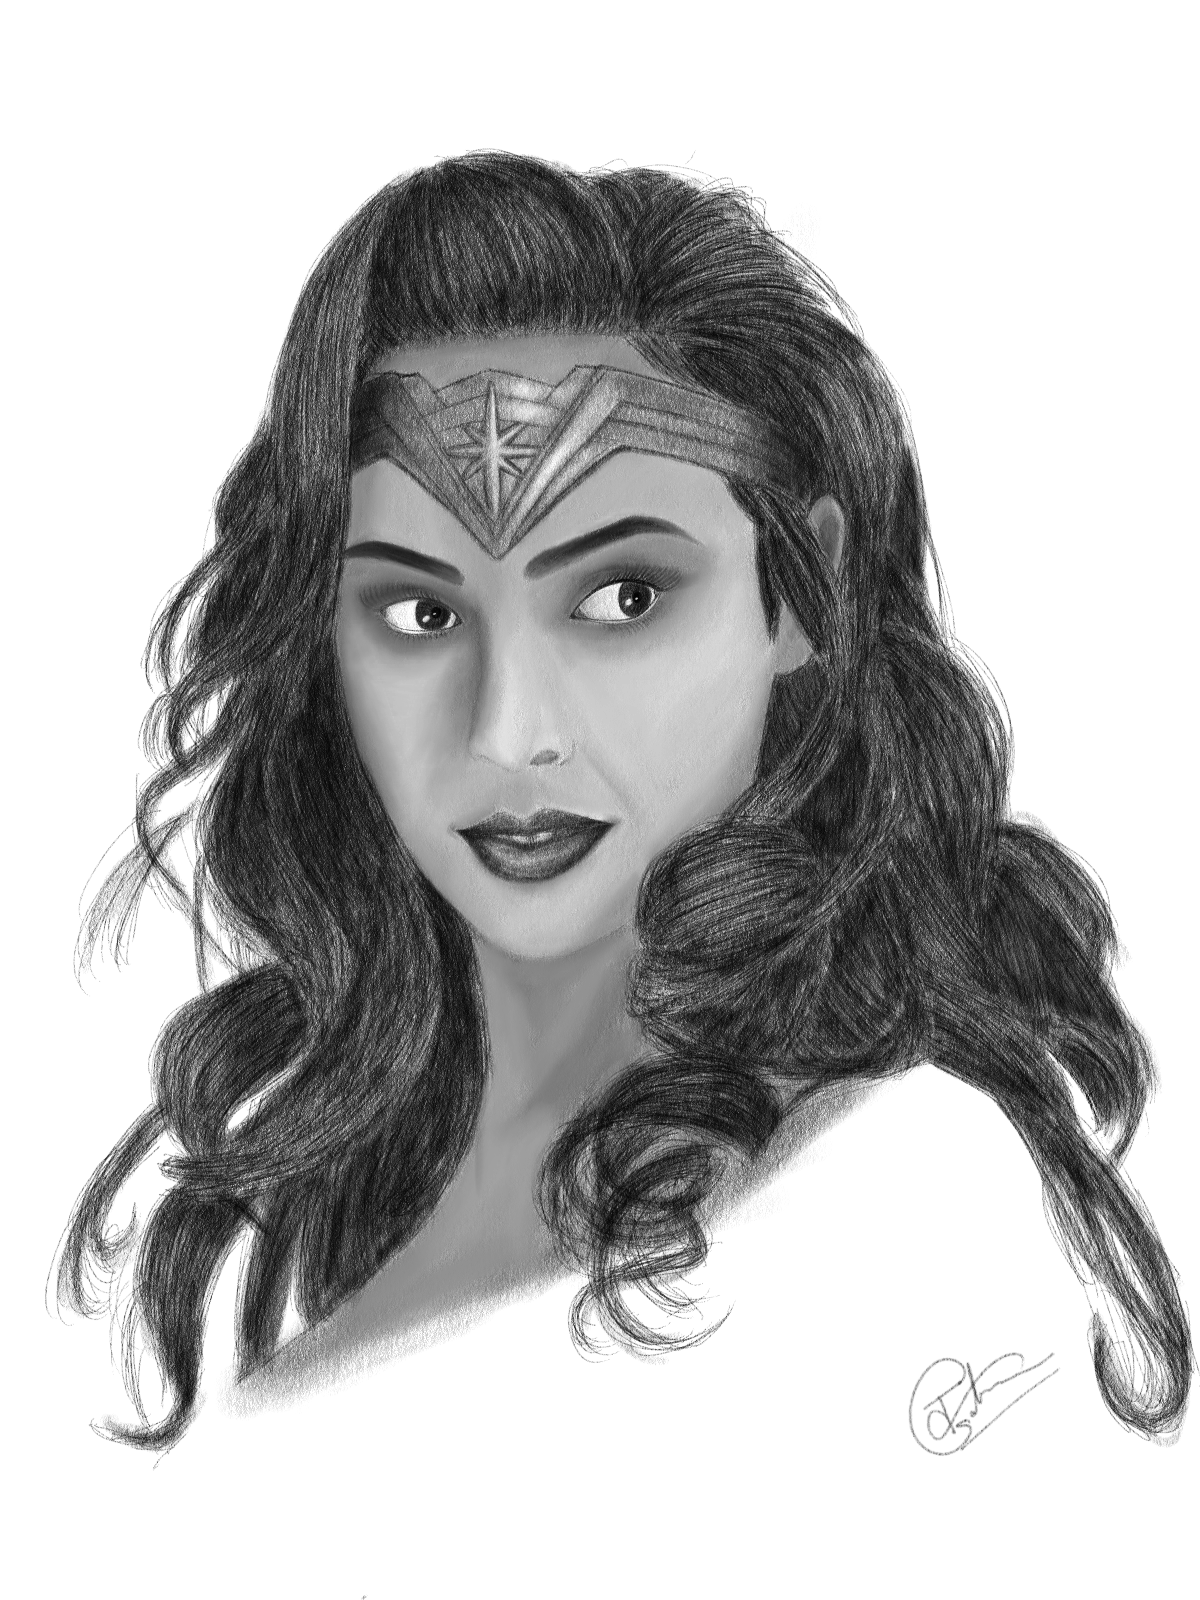 I created a portrait sketch of Wonder Woman | Scrolller